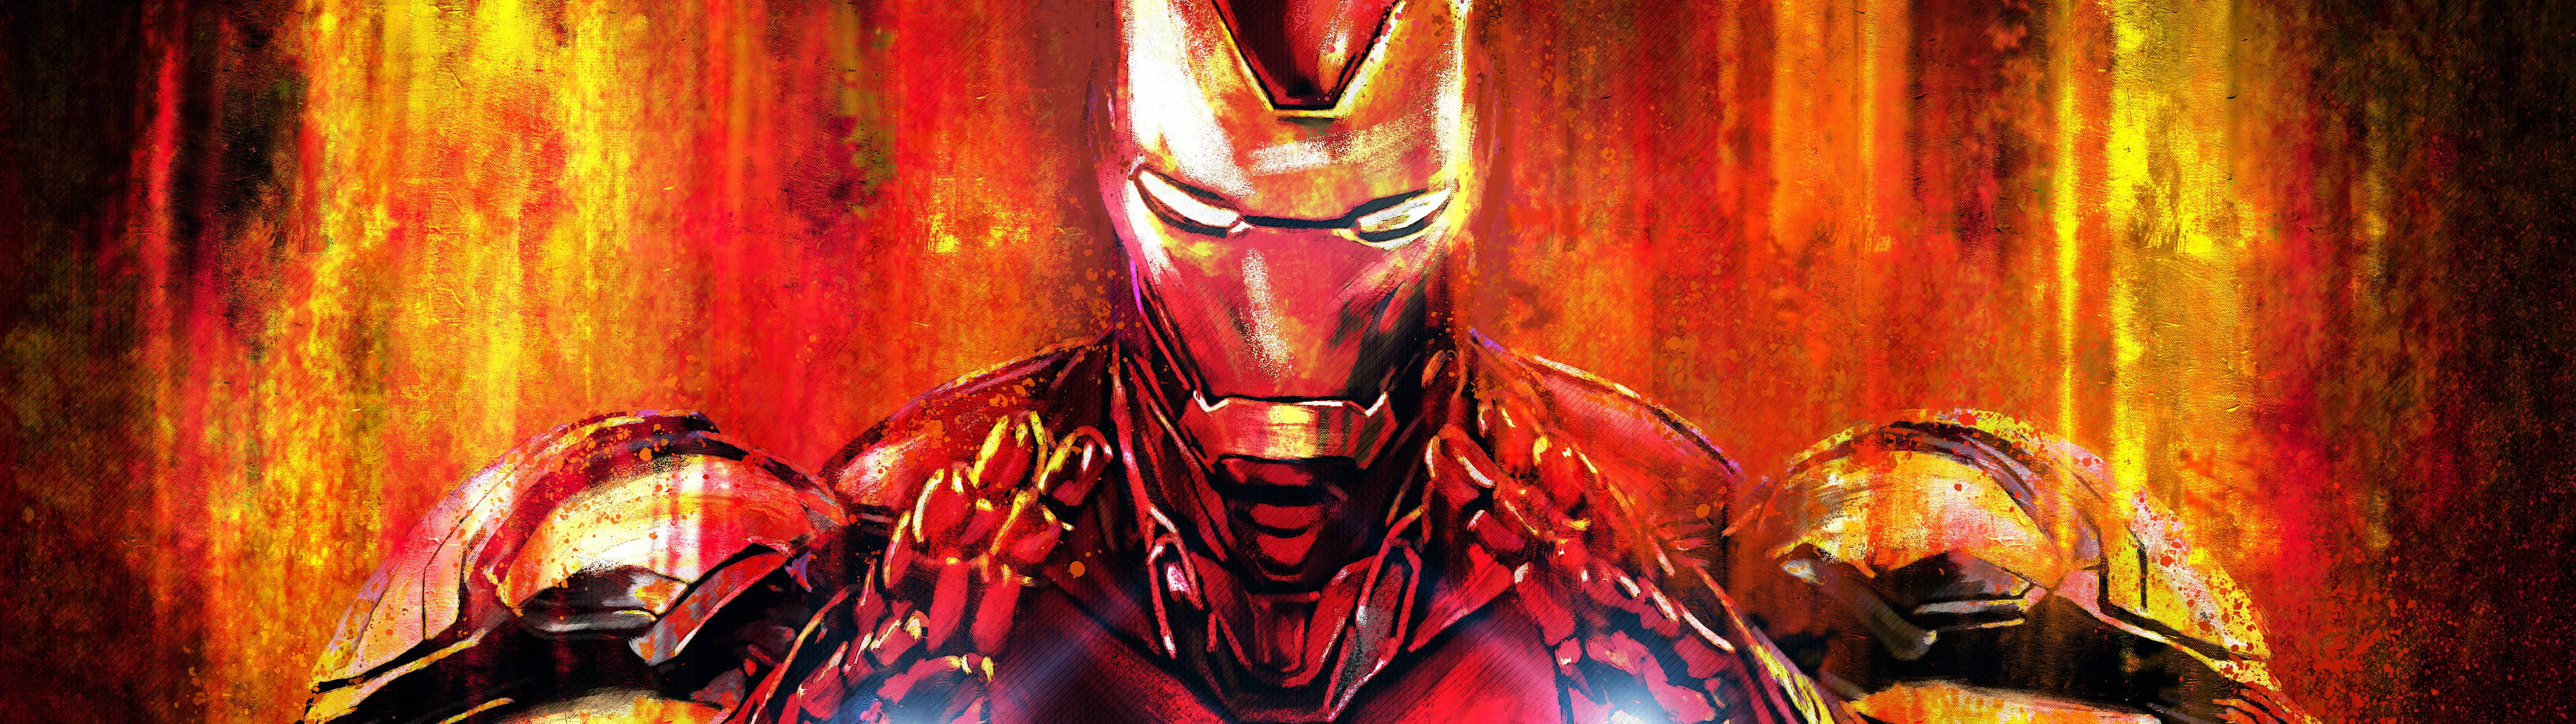 Marvel's Ironman Art 5120 X 1440 Wallpaper